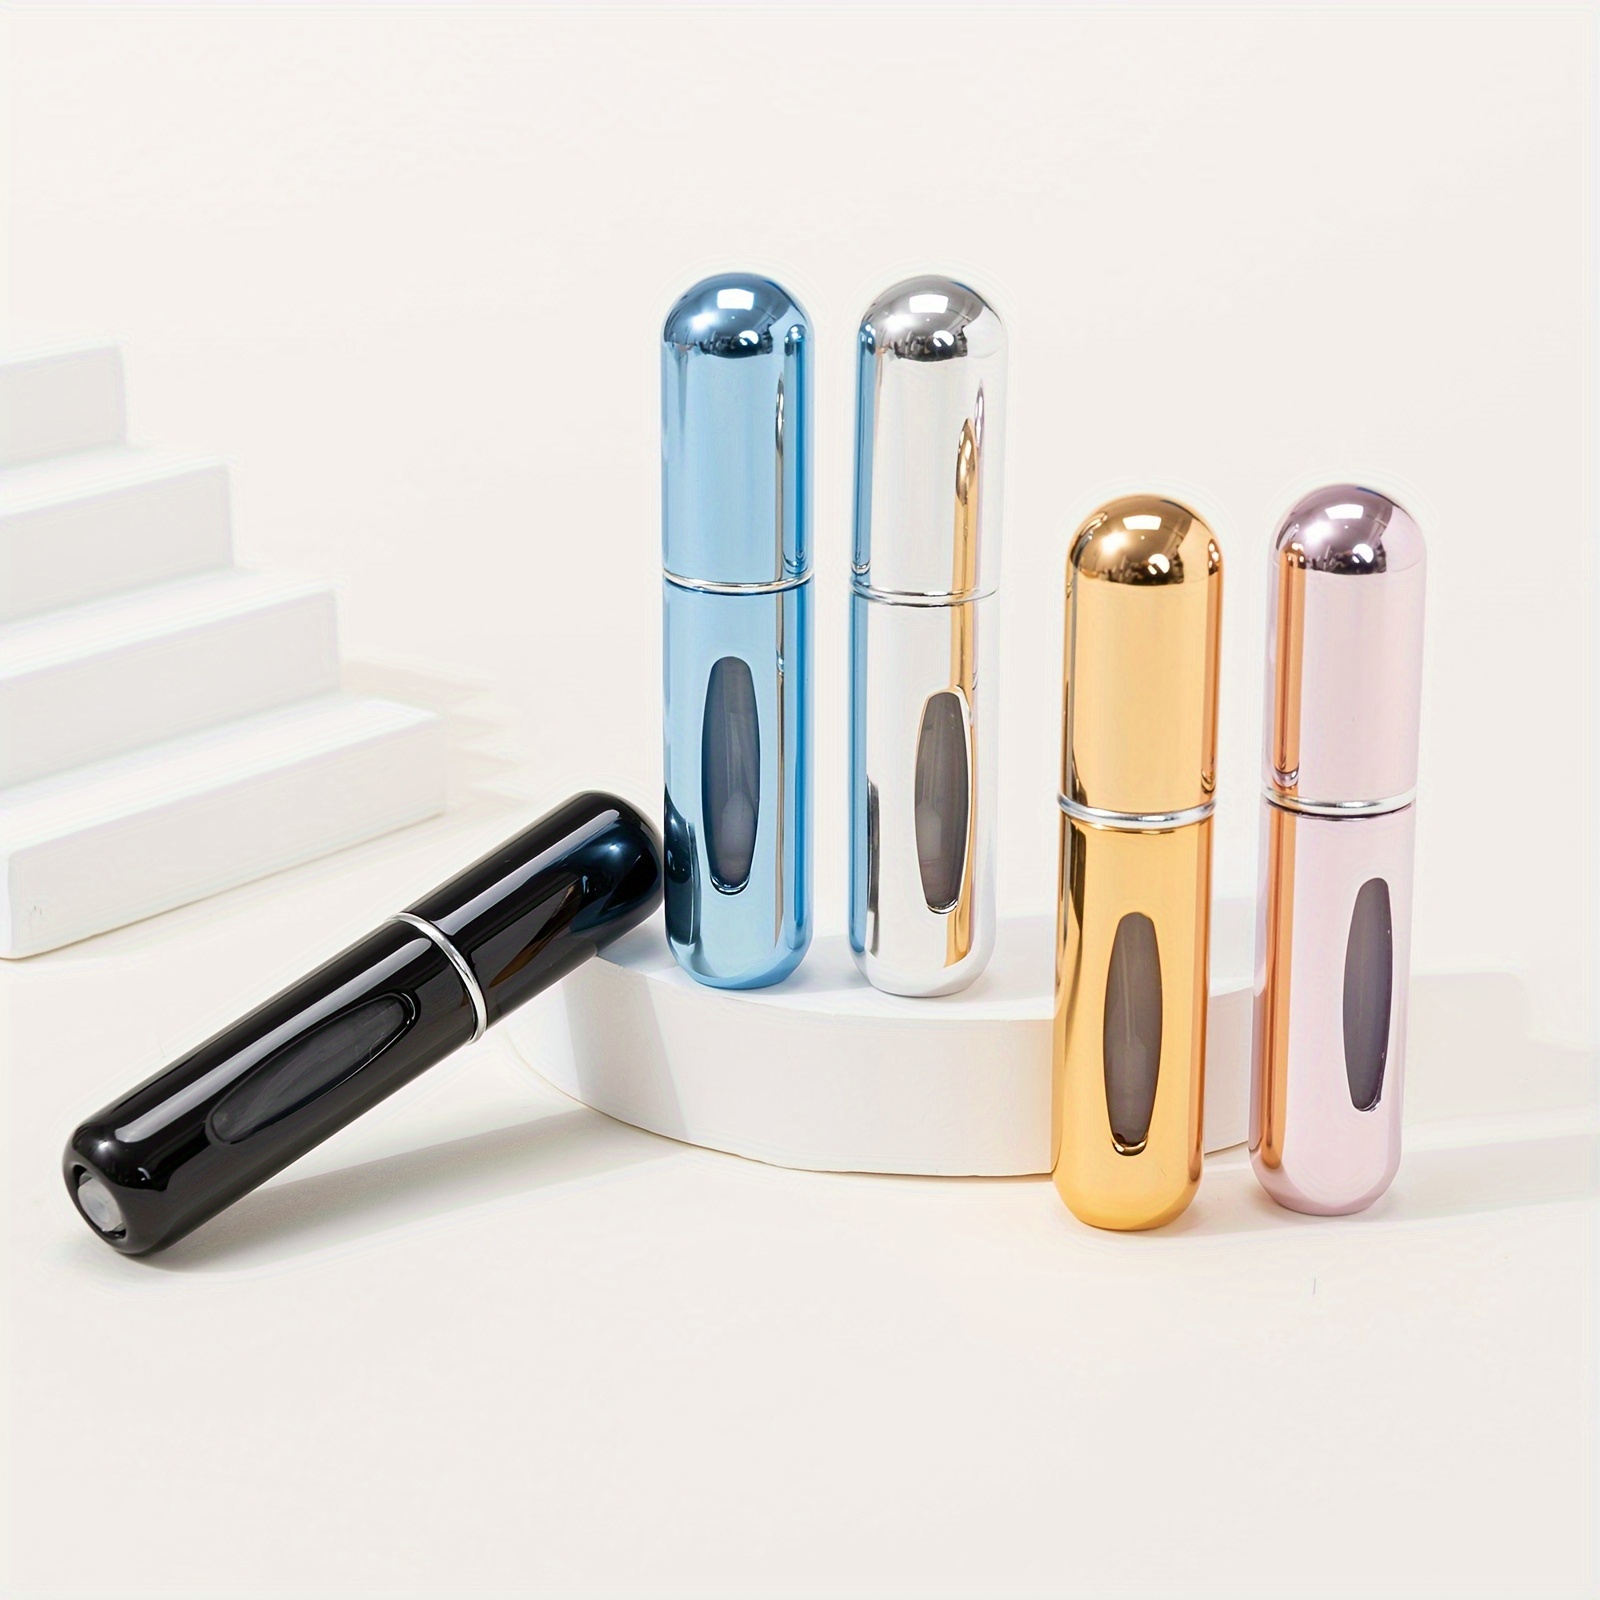 

5pcs Unscented Bpa-free Portable Refillable Cosmetic Spray Bottles - Travel-friendly Bottom-filling Perfume Atomizer Set